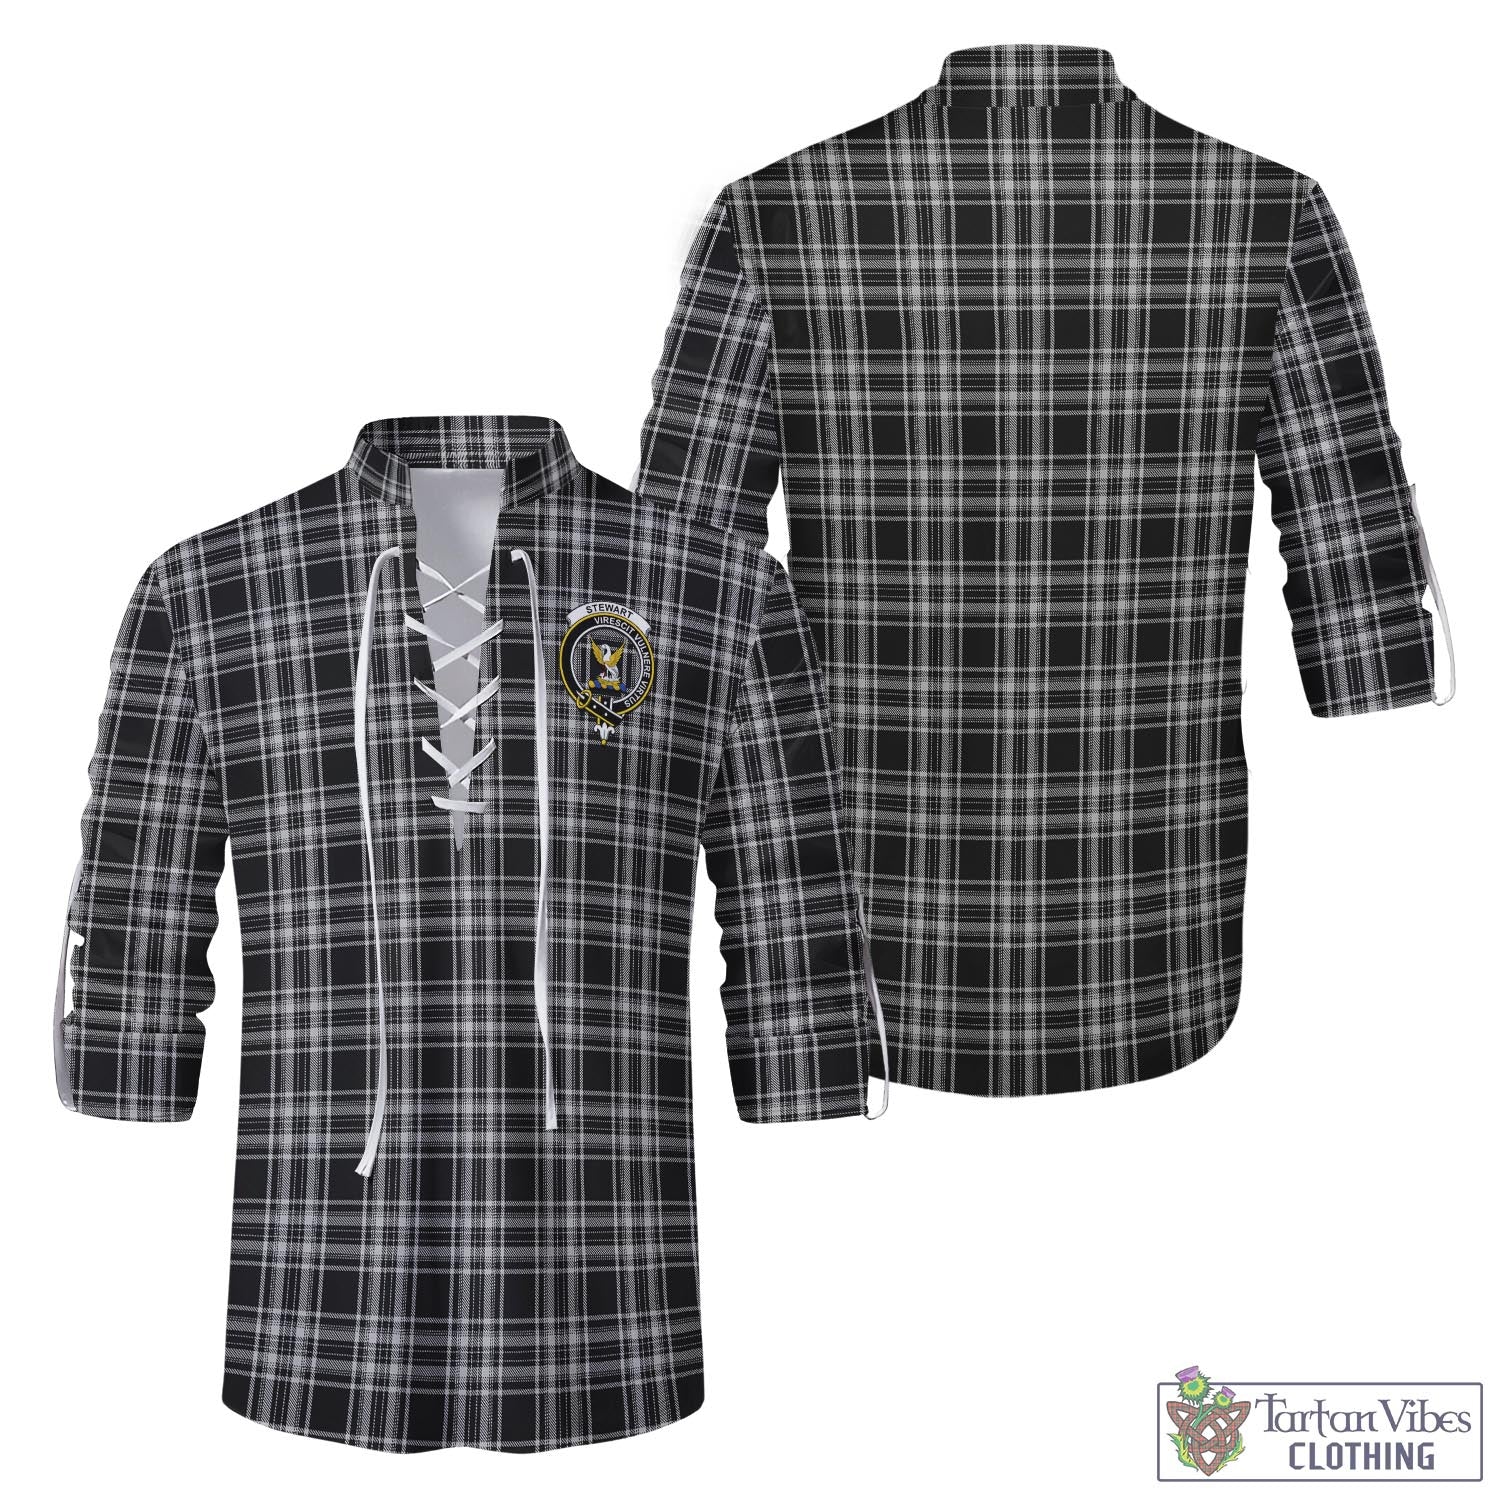 Tartan Vibes Clothing Stewart Black and White Tartan Men's Scottish Traditional Jacobite Ghillie Kilt Shirt with Family Crest